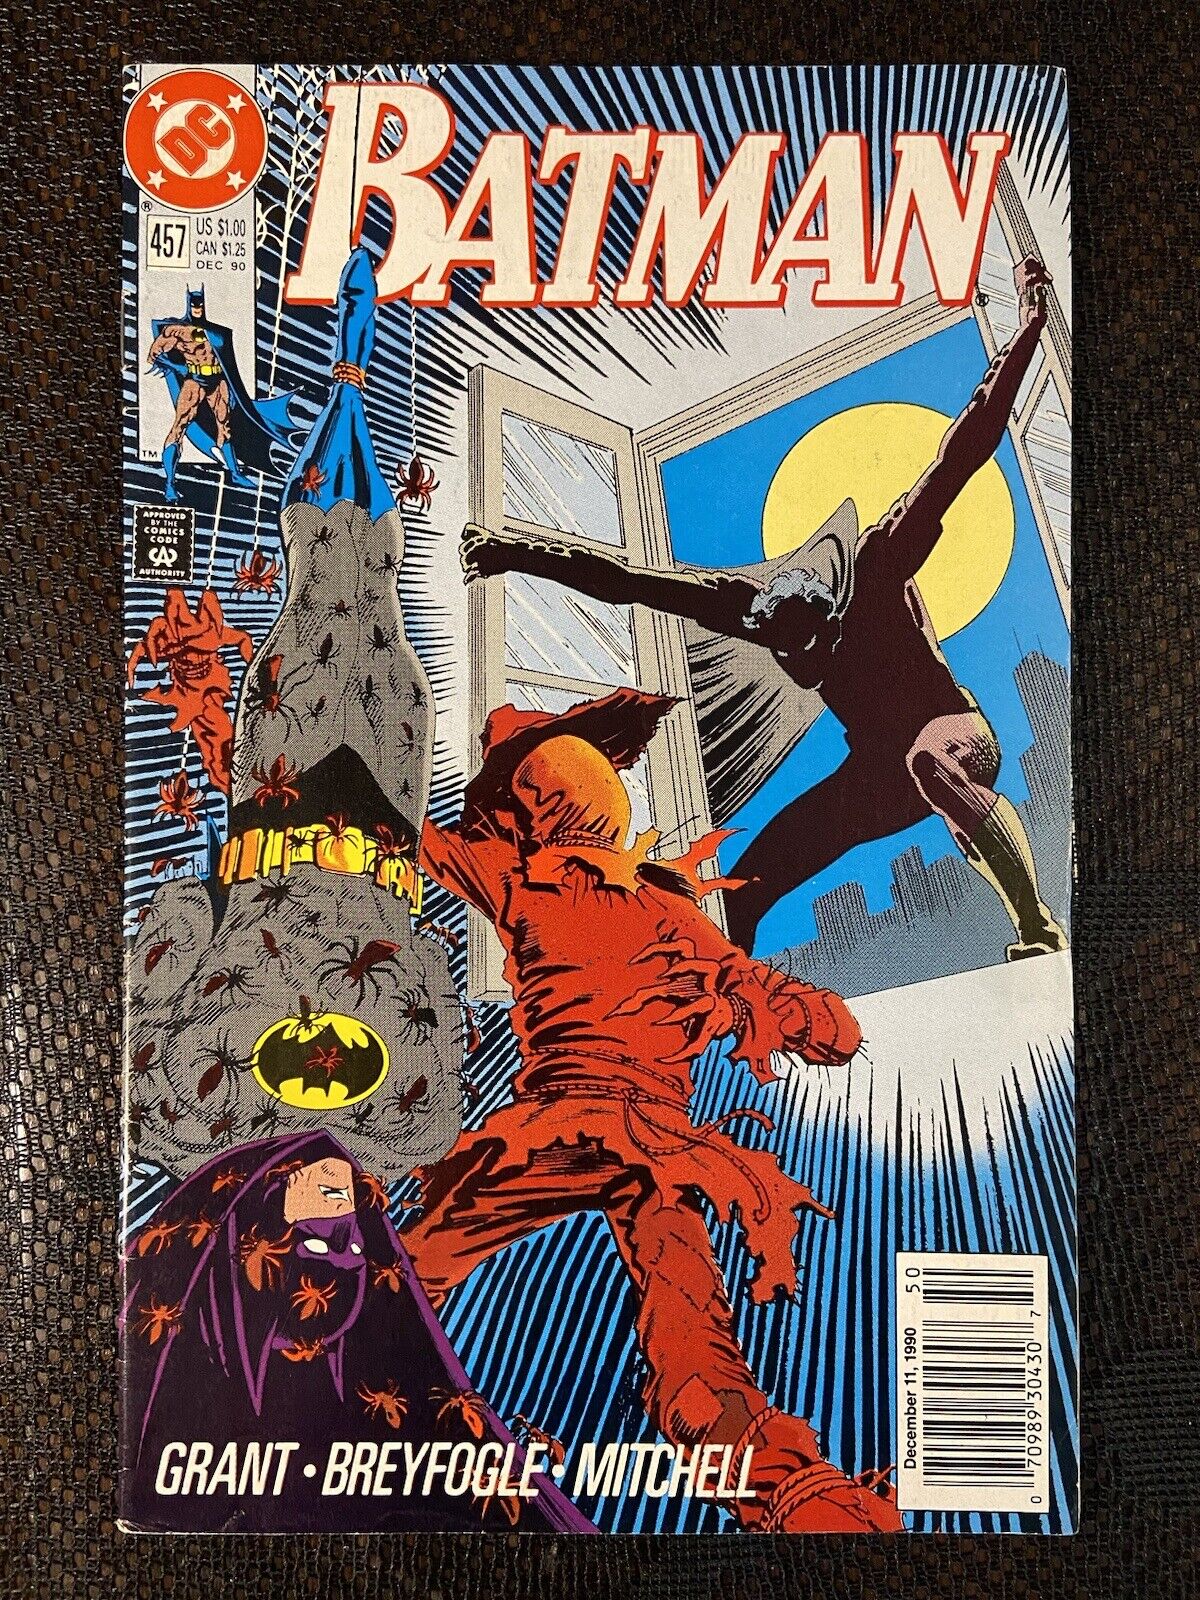 BATMAN #457 (1990) DEBUT OF TIM DRAKE’S NEW ROBIN COSTUME NEWSSTAND EDITION